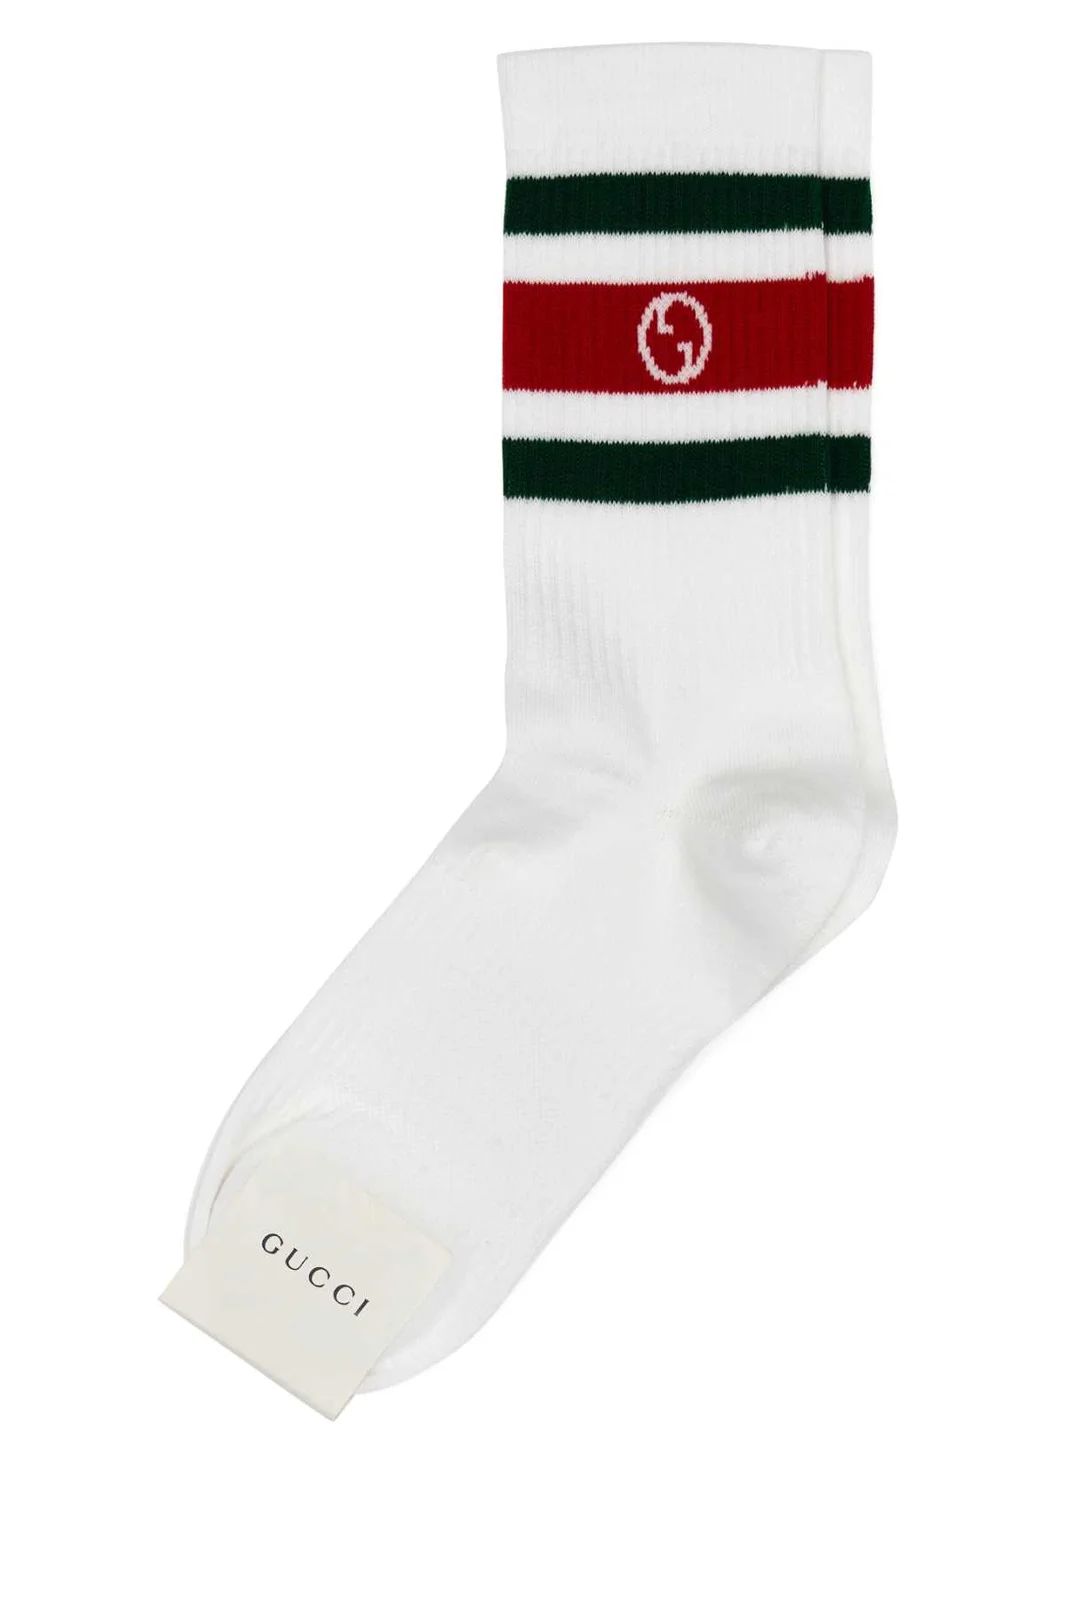 Gucci Interlocking G Ribbed Knit Socks | Cettire Global